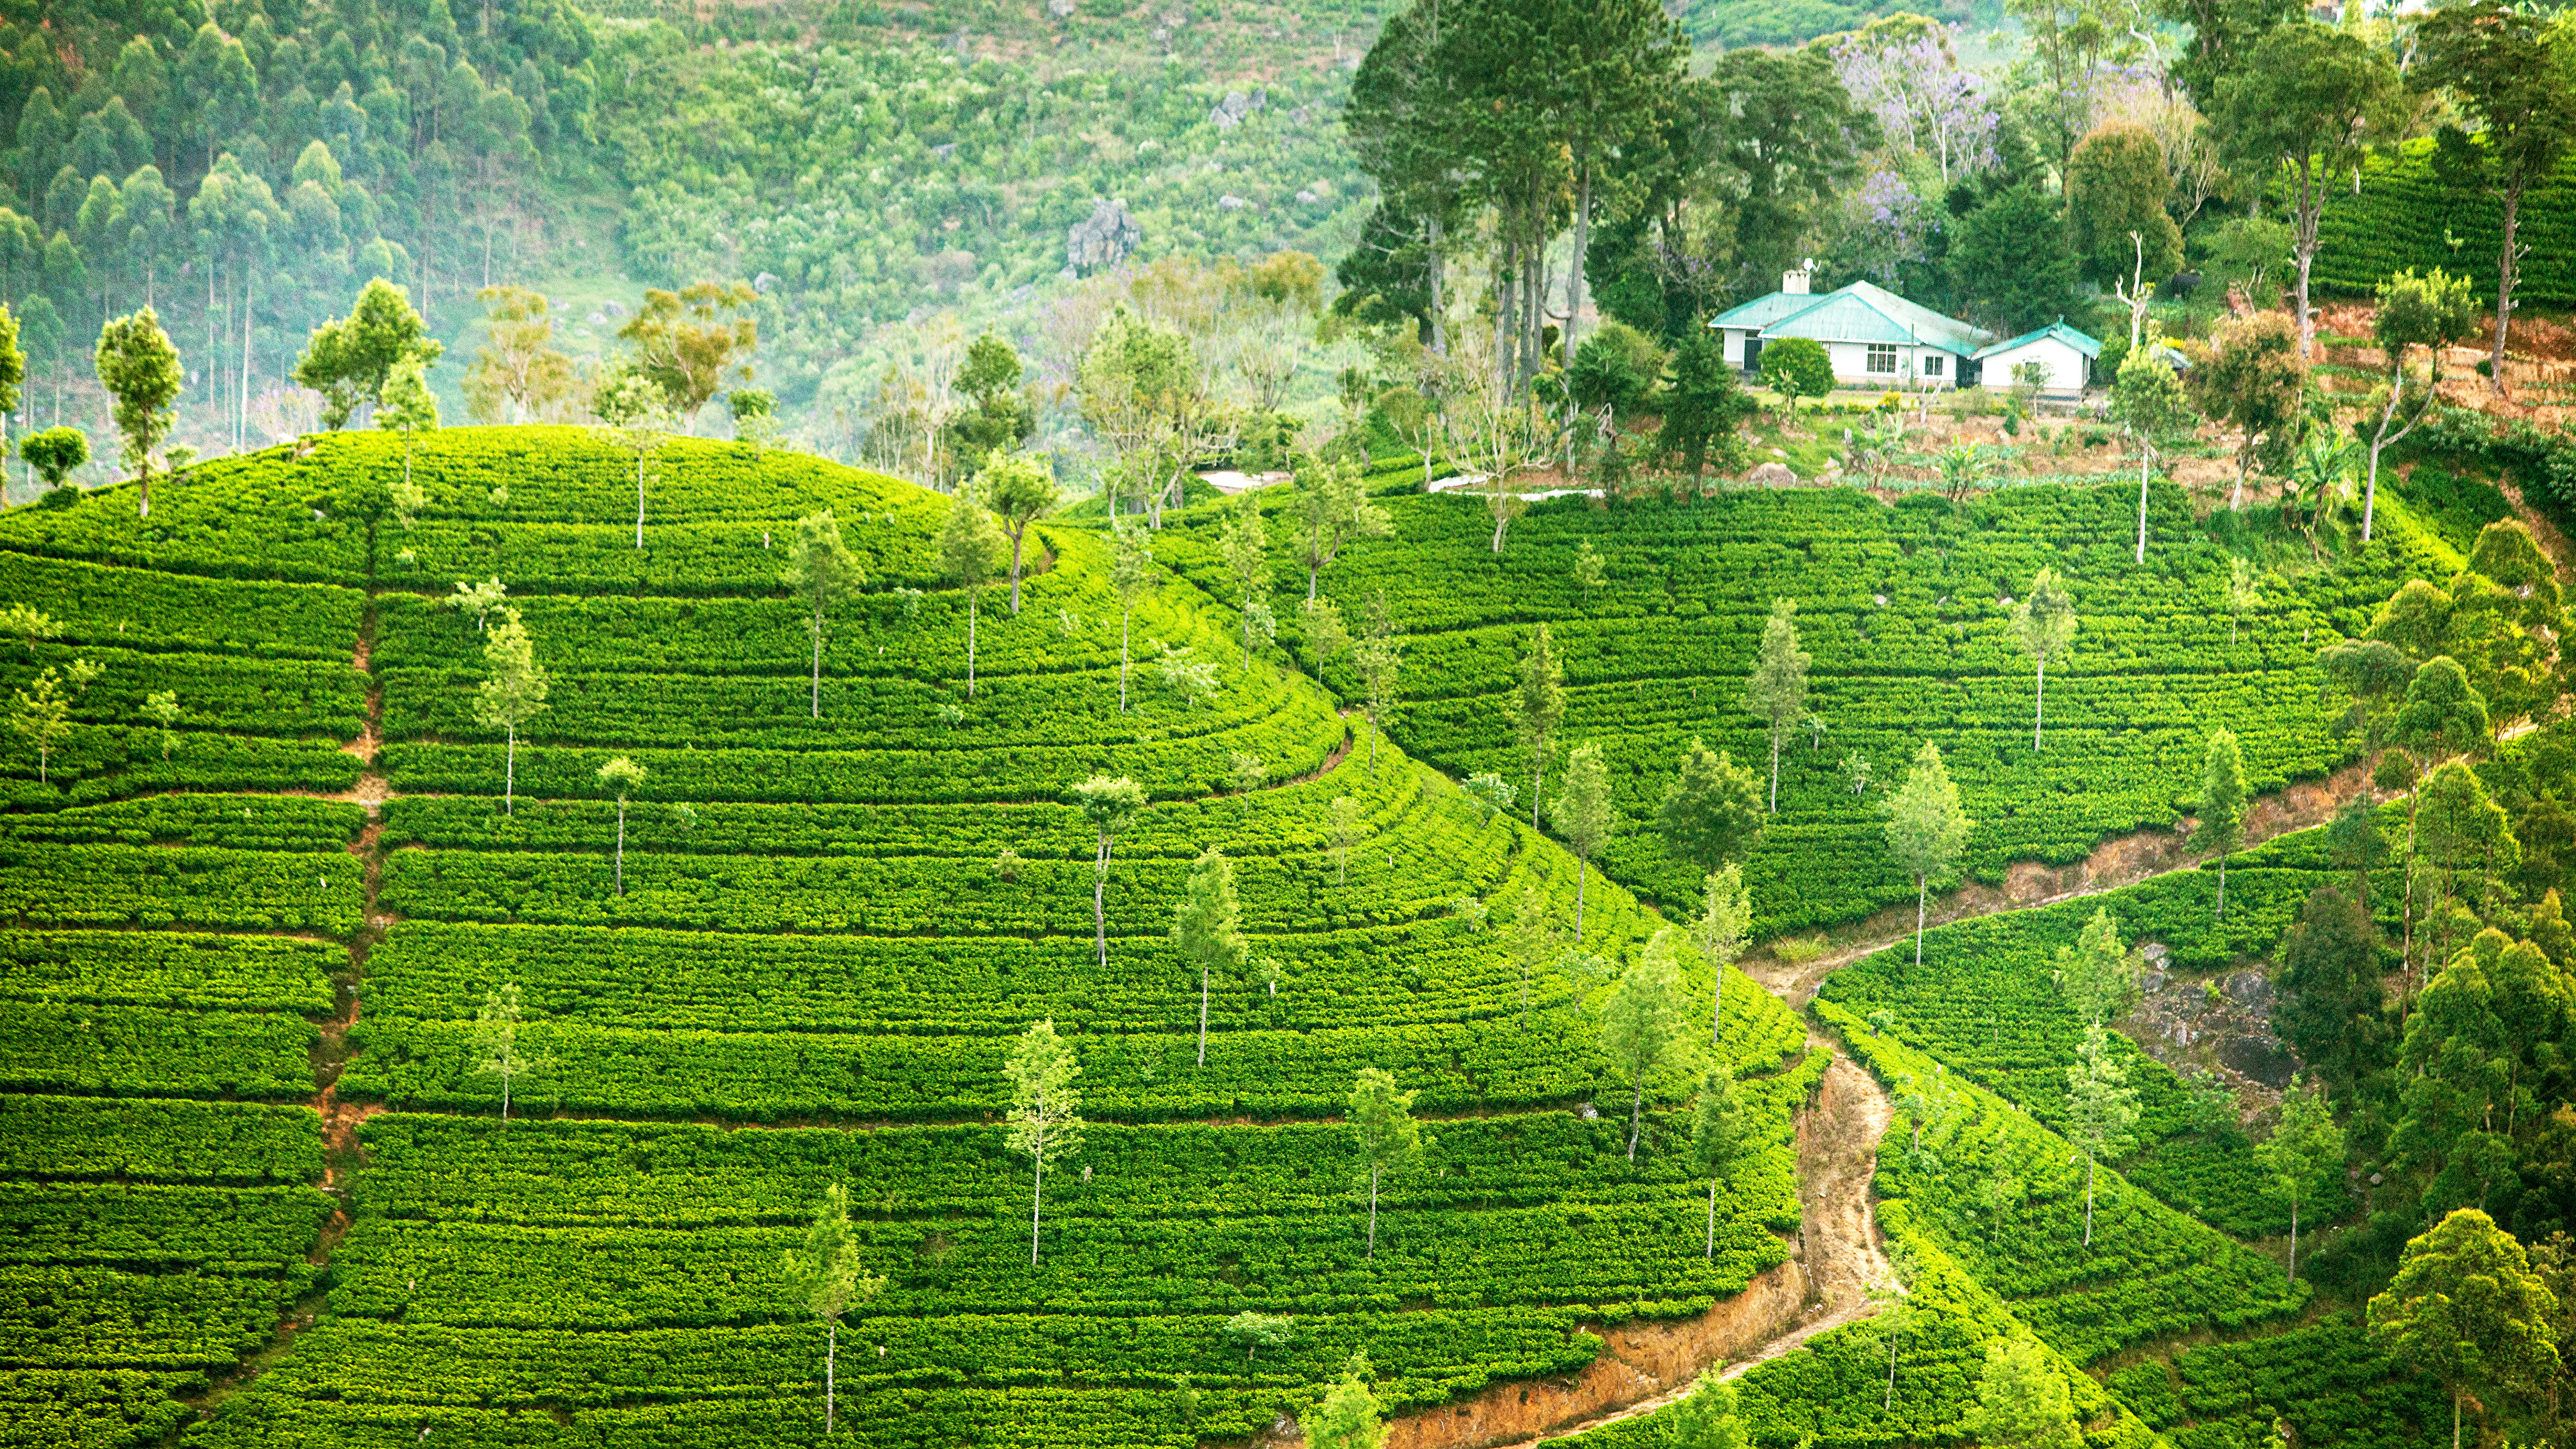 Шри ланка колония. Плантации Шри Ланки. Остров Цейлон. Шри Ланка фото чайные плантации. Рисовые террасы Шри Ланки.